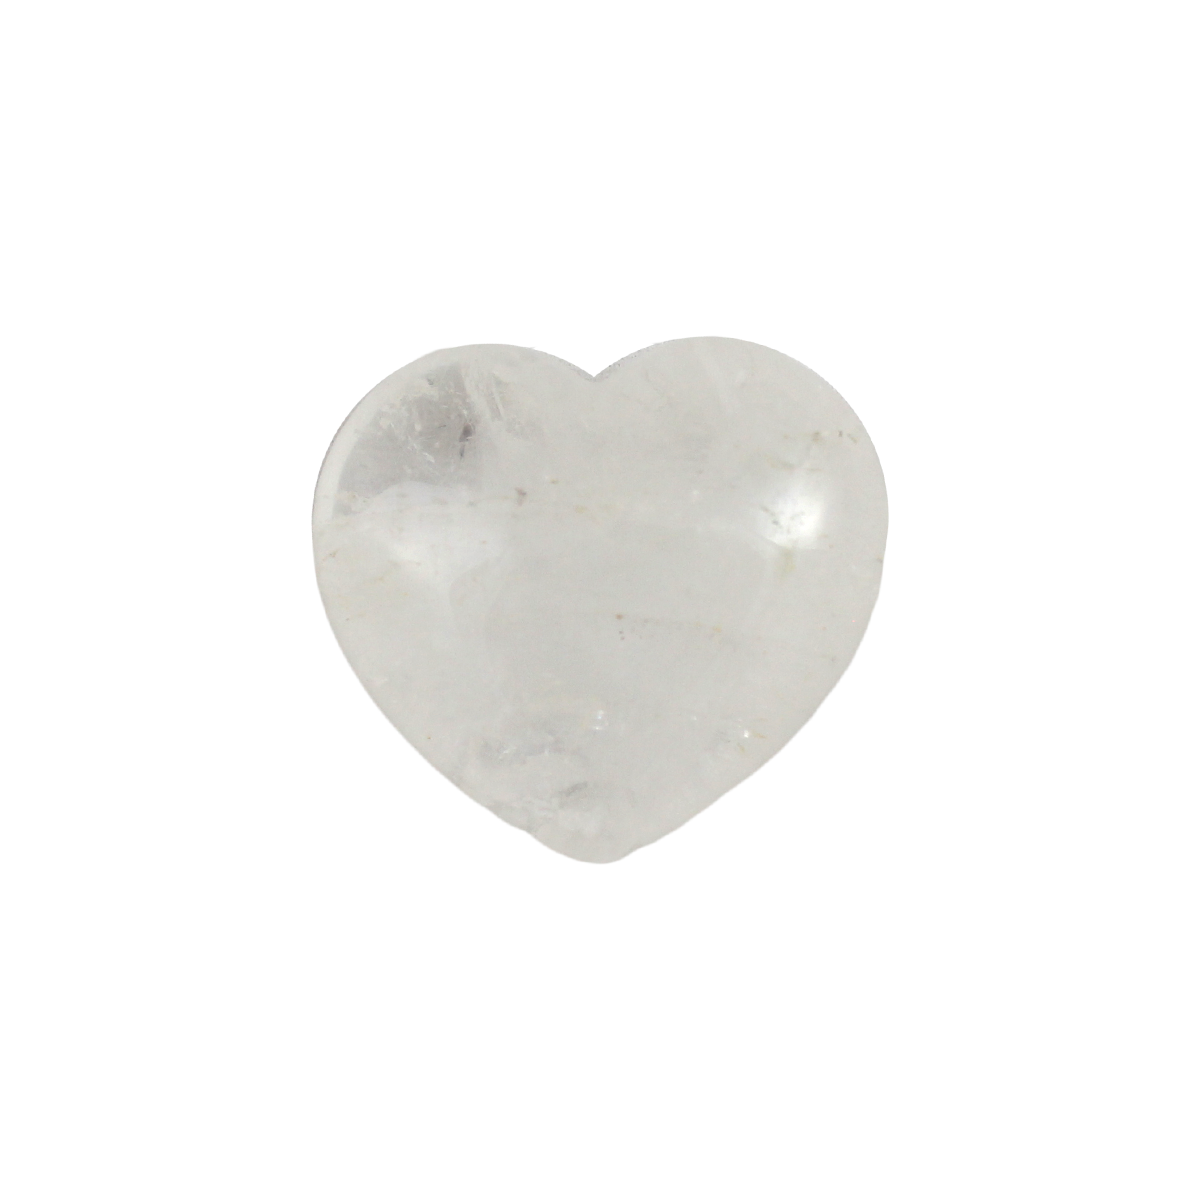 Small heart-shaped Clear Quartz